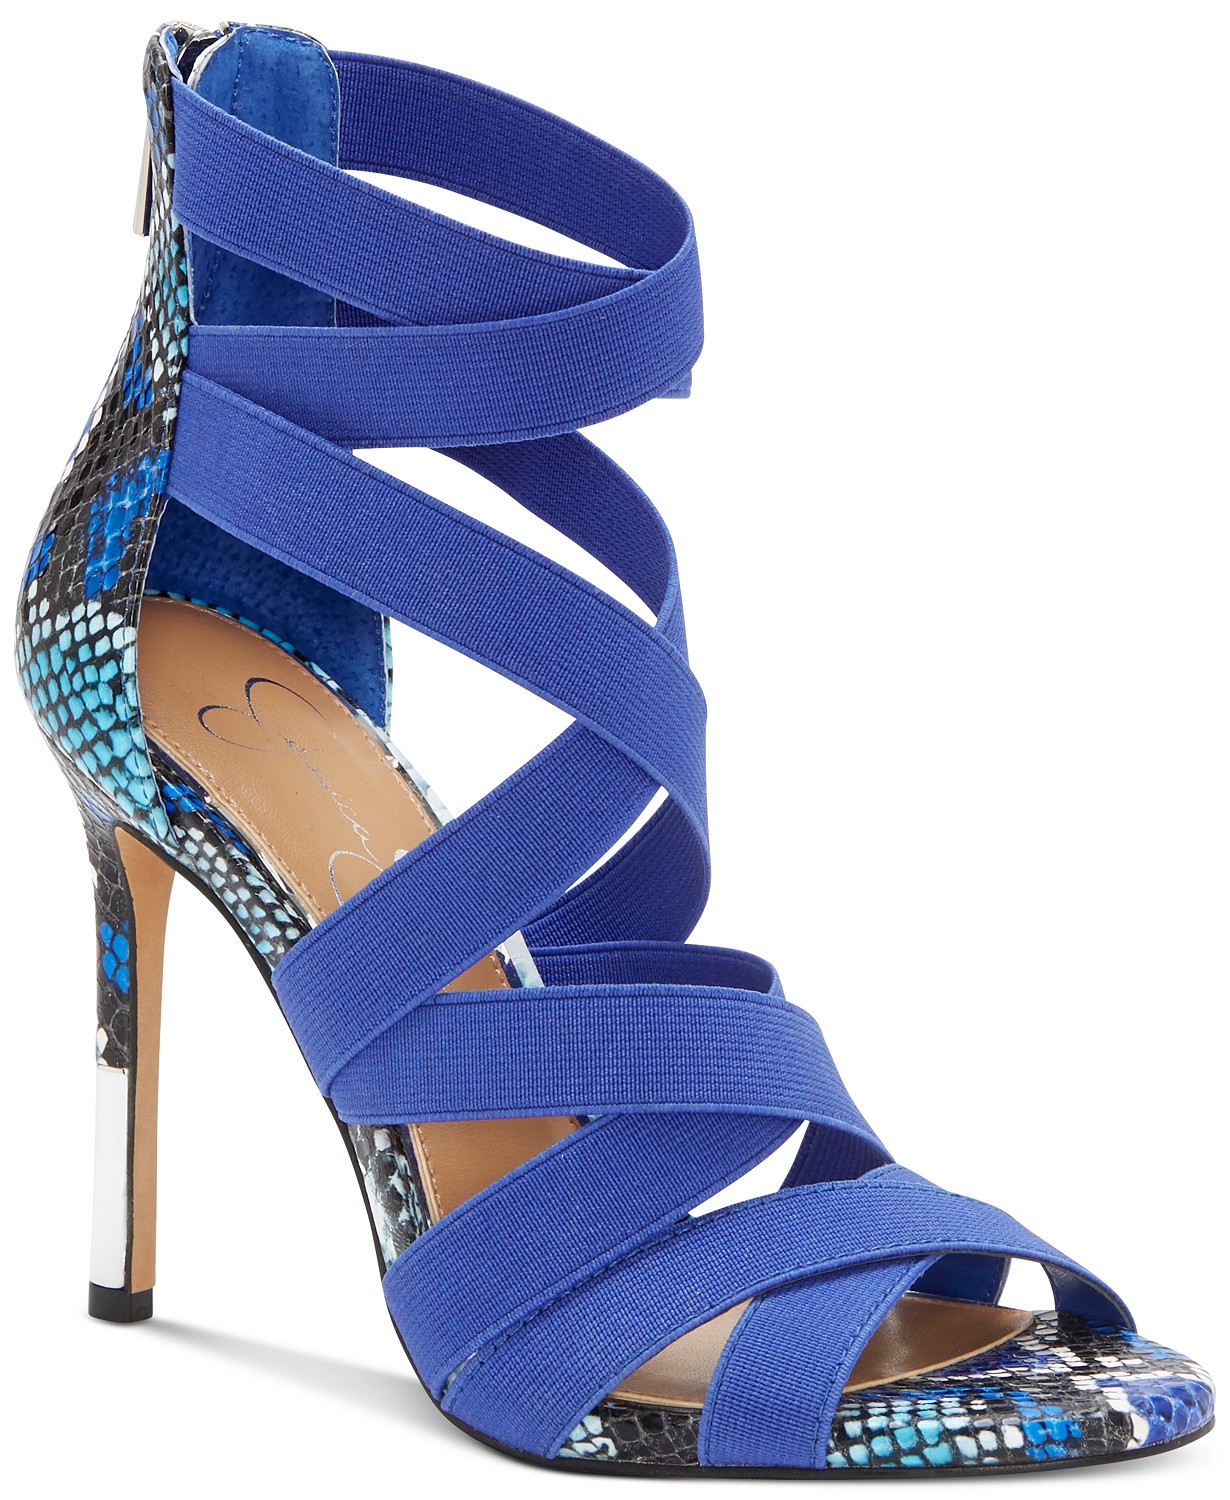 jessica simpson heels canada